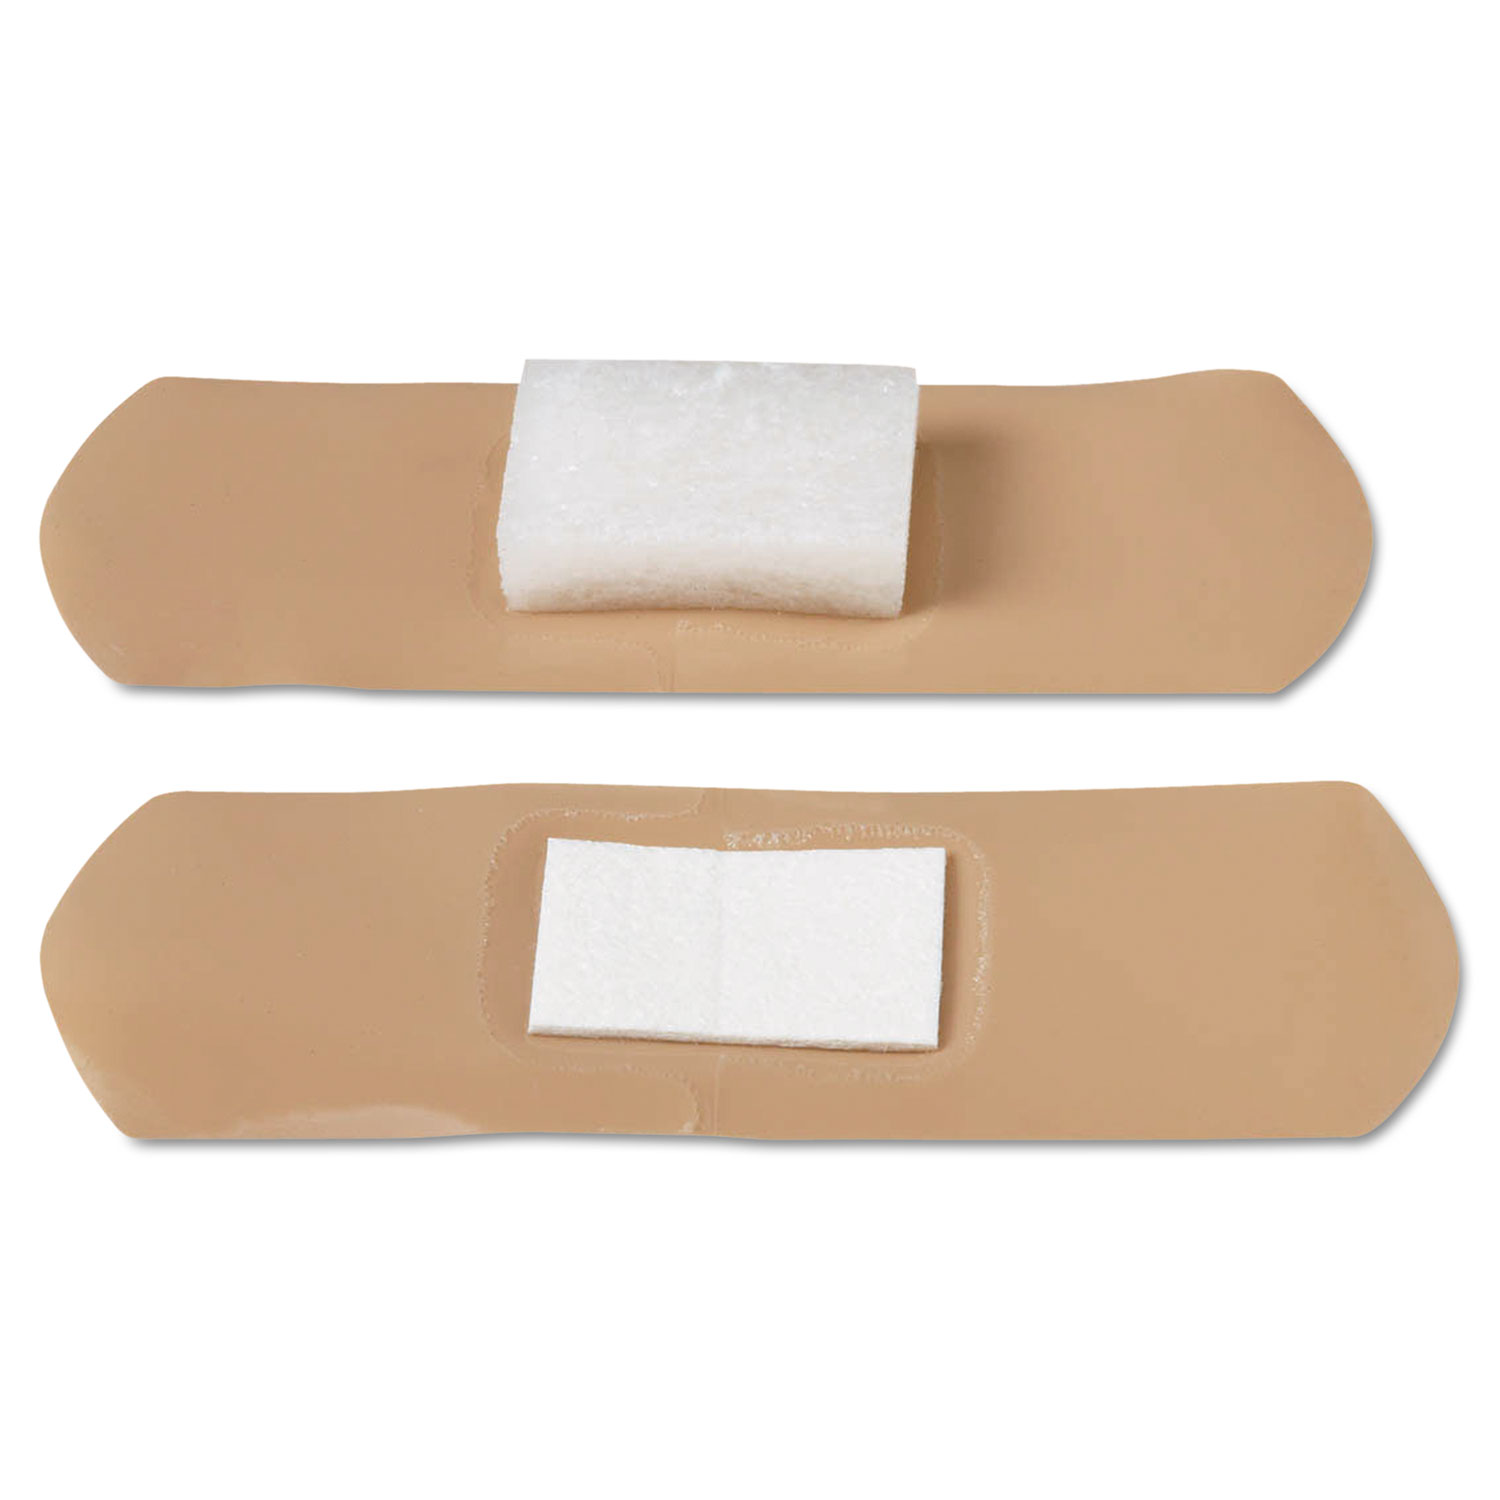  Curad NON85100 Pressure Adhesive Bandages, 2 3/4 x 1, 100/Box (MIINON85100) 